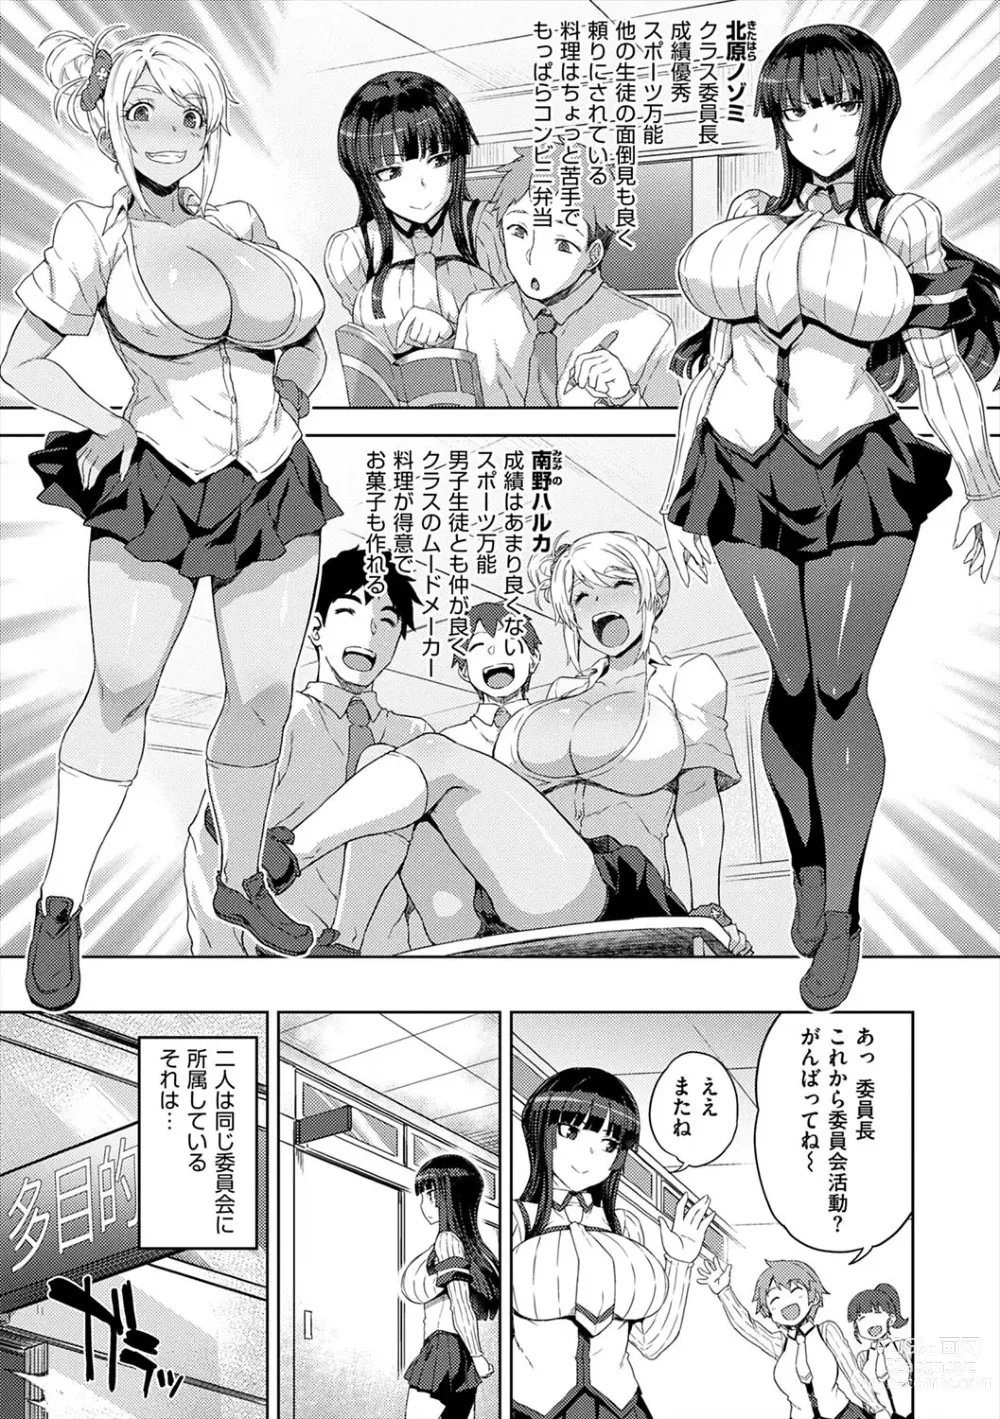 Page 9 of manga Marble Girls